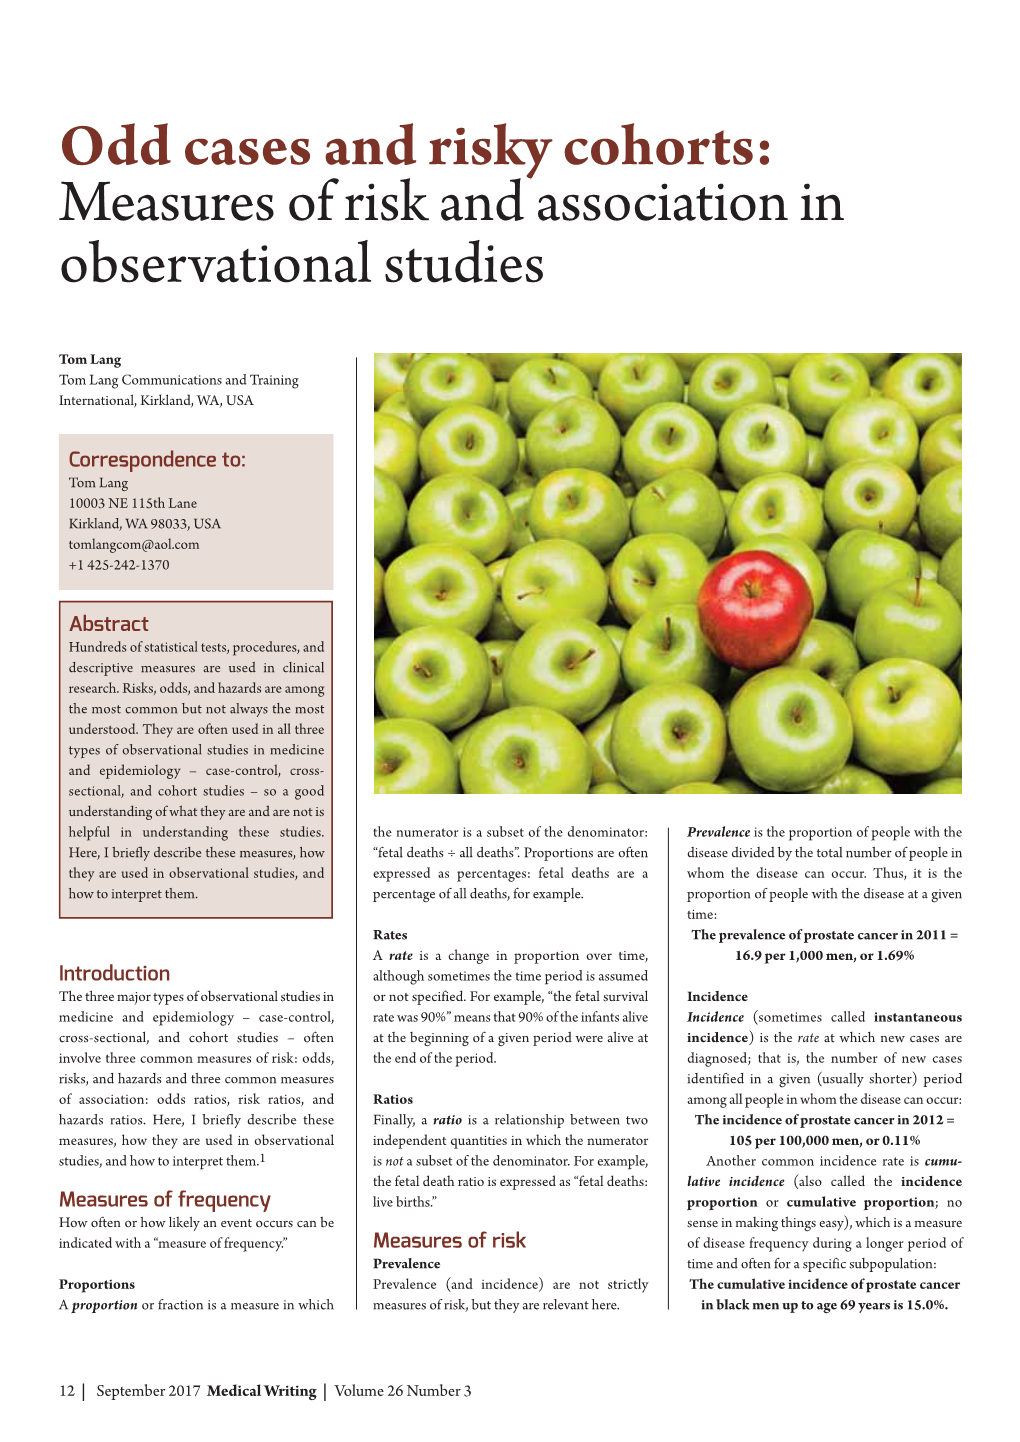 Measures of Risk and Association in Observational Studies